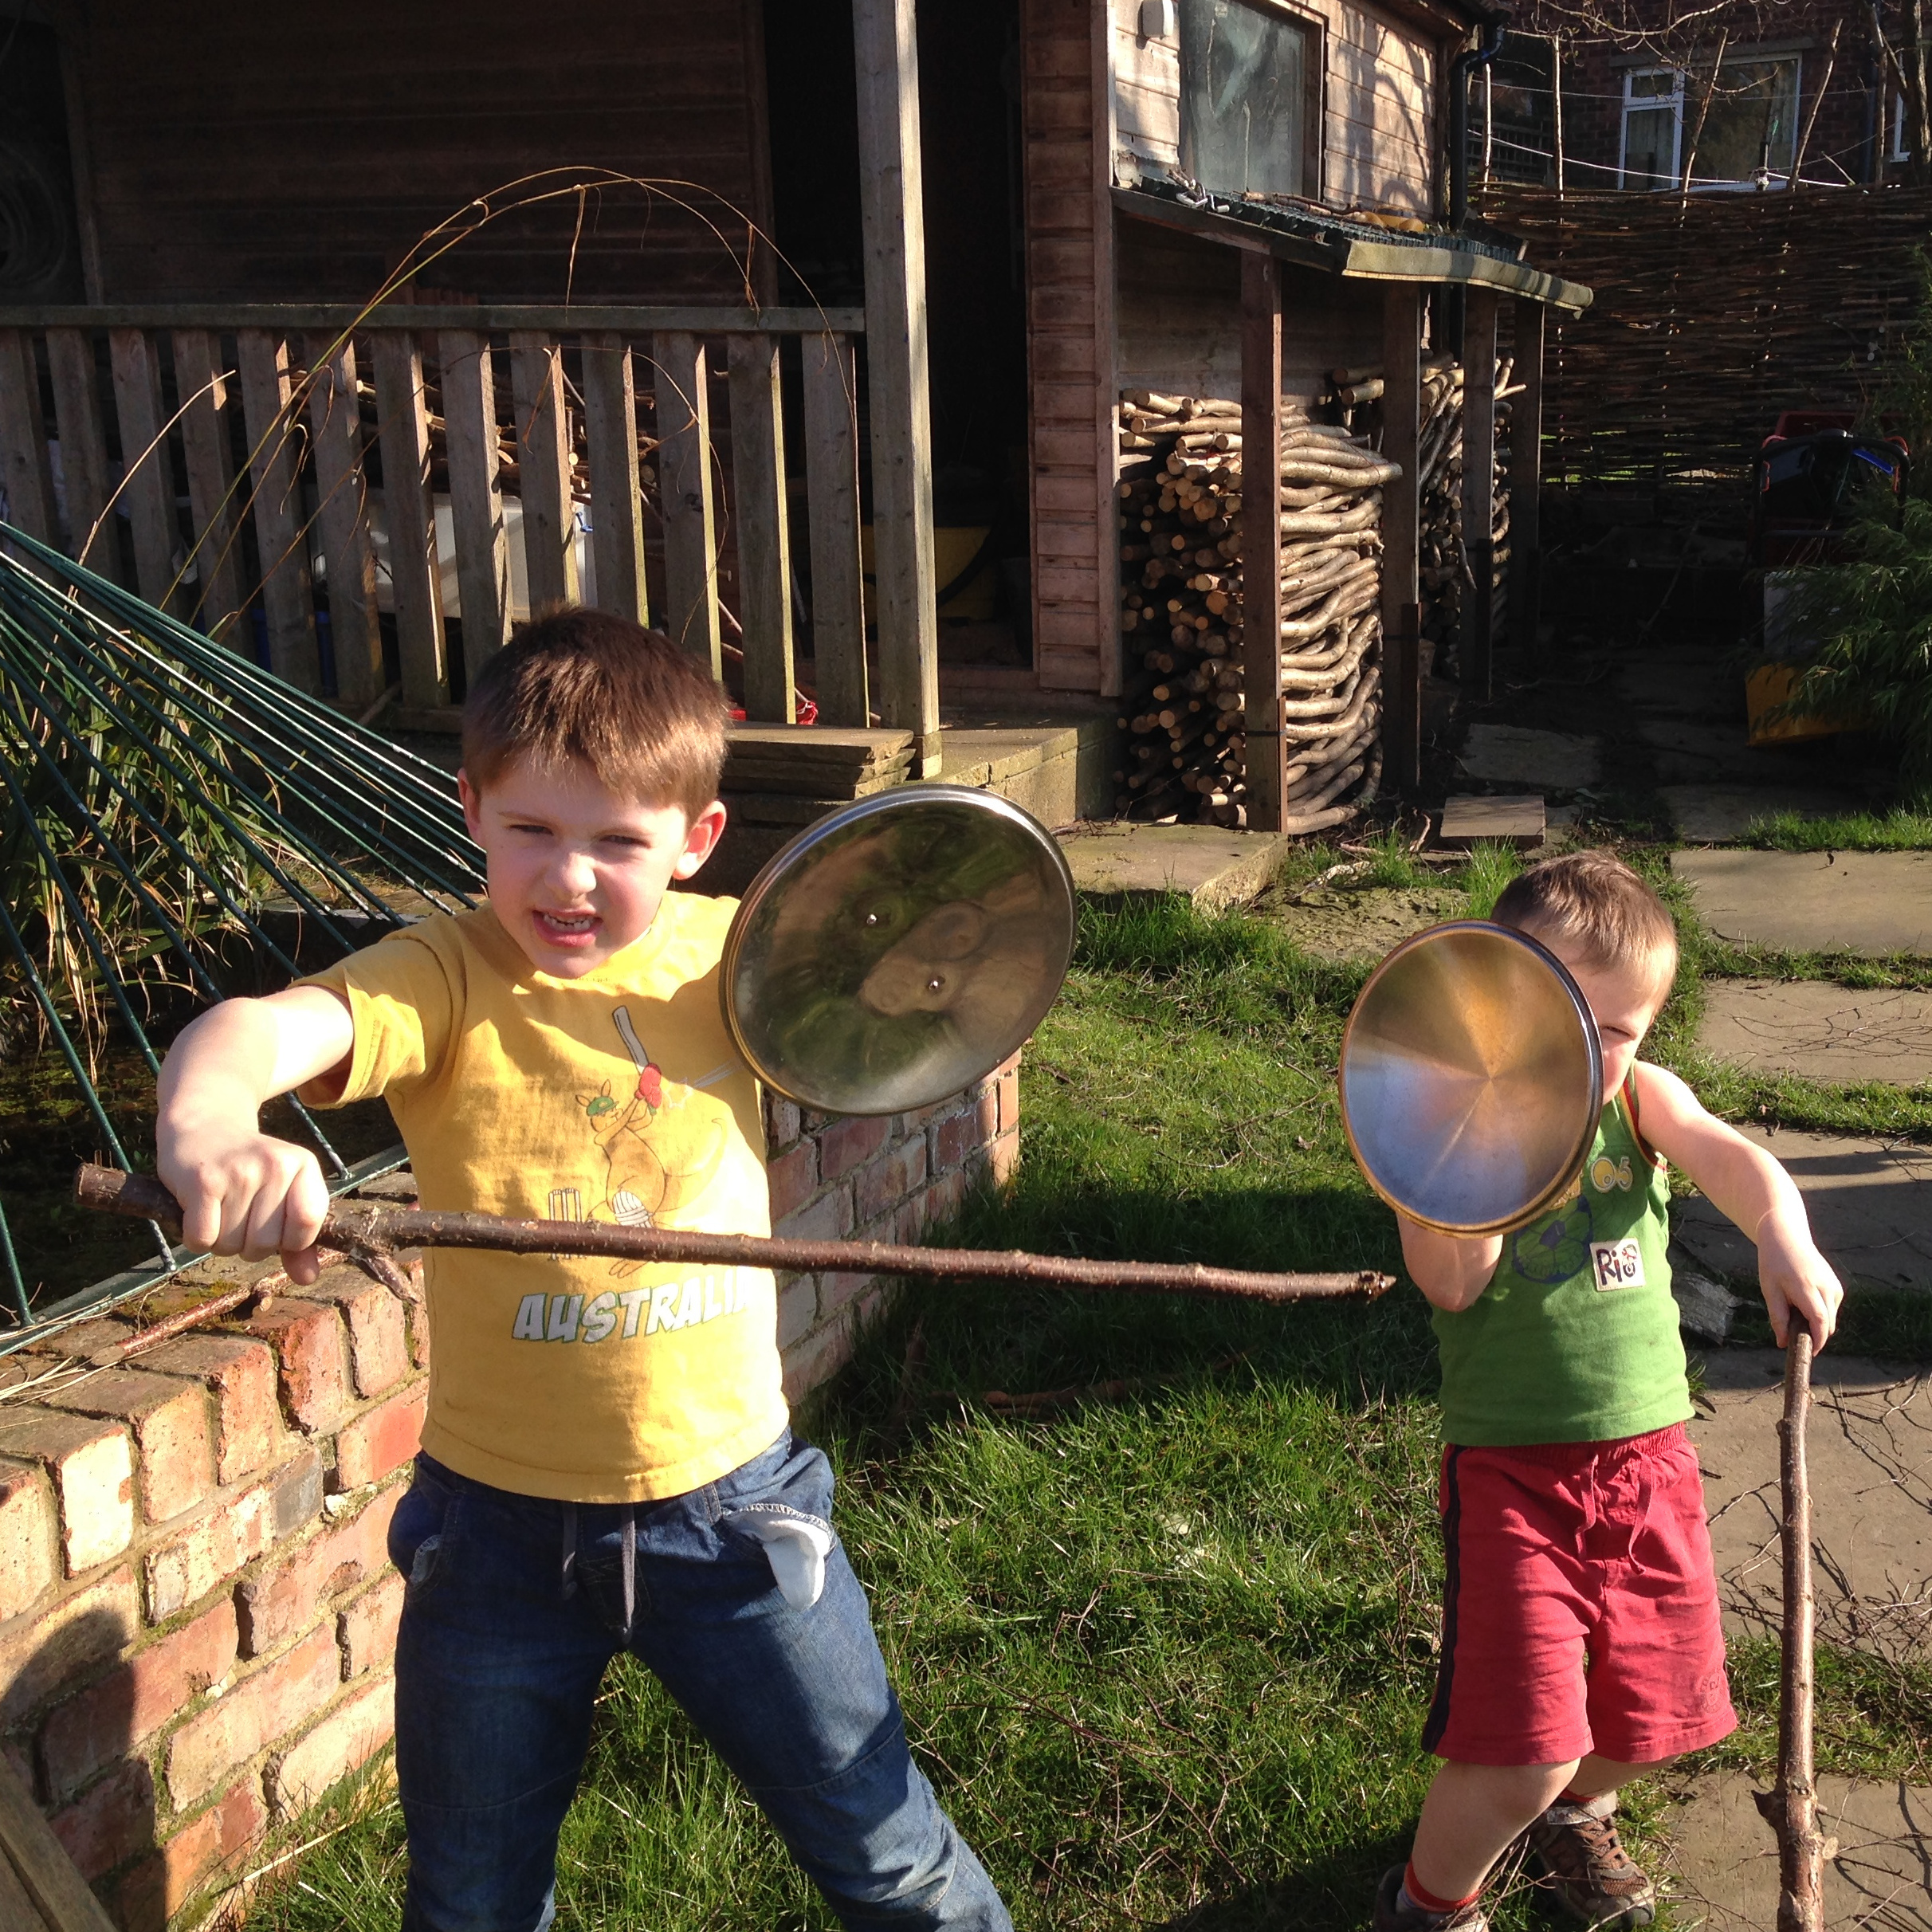 2 boys holding sticks and saucepan lids, pretending to fight